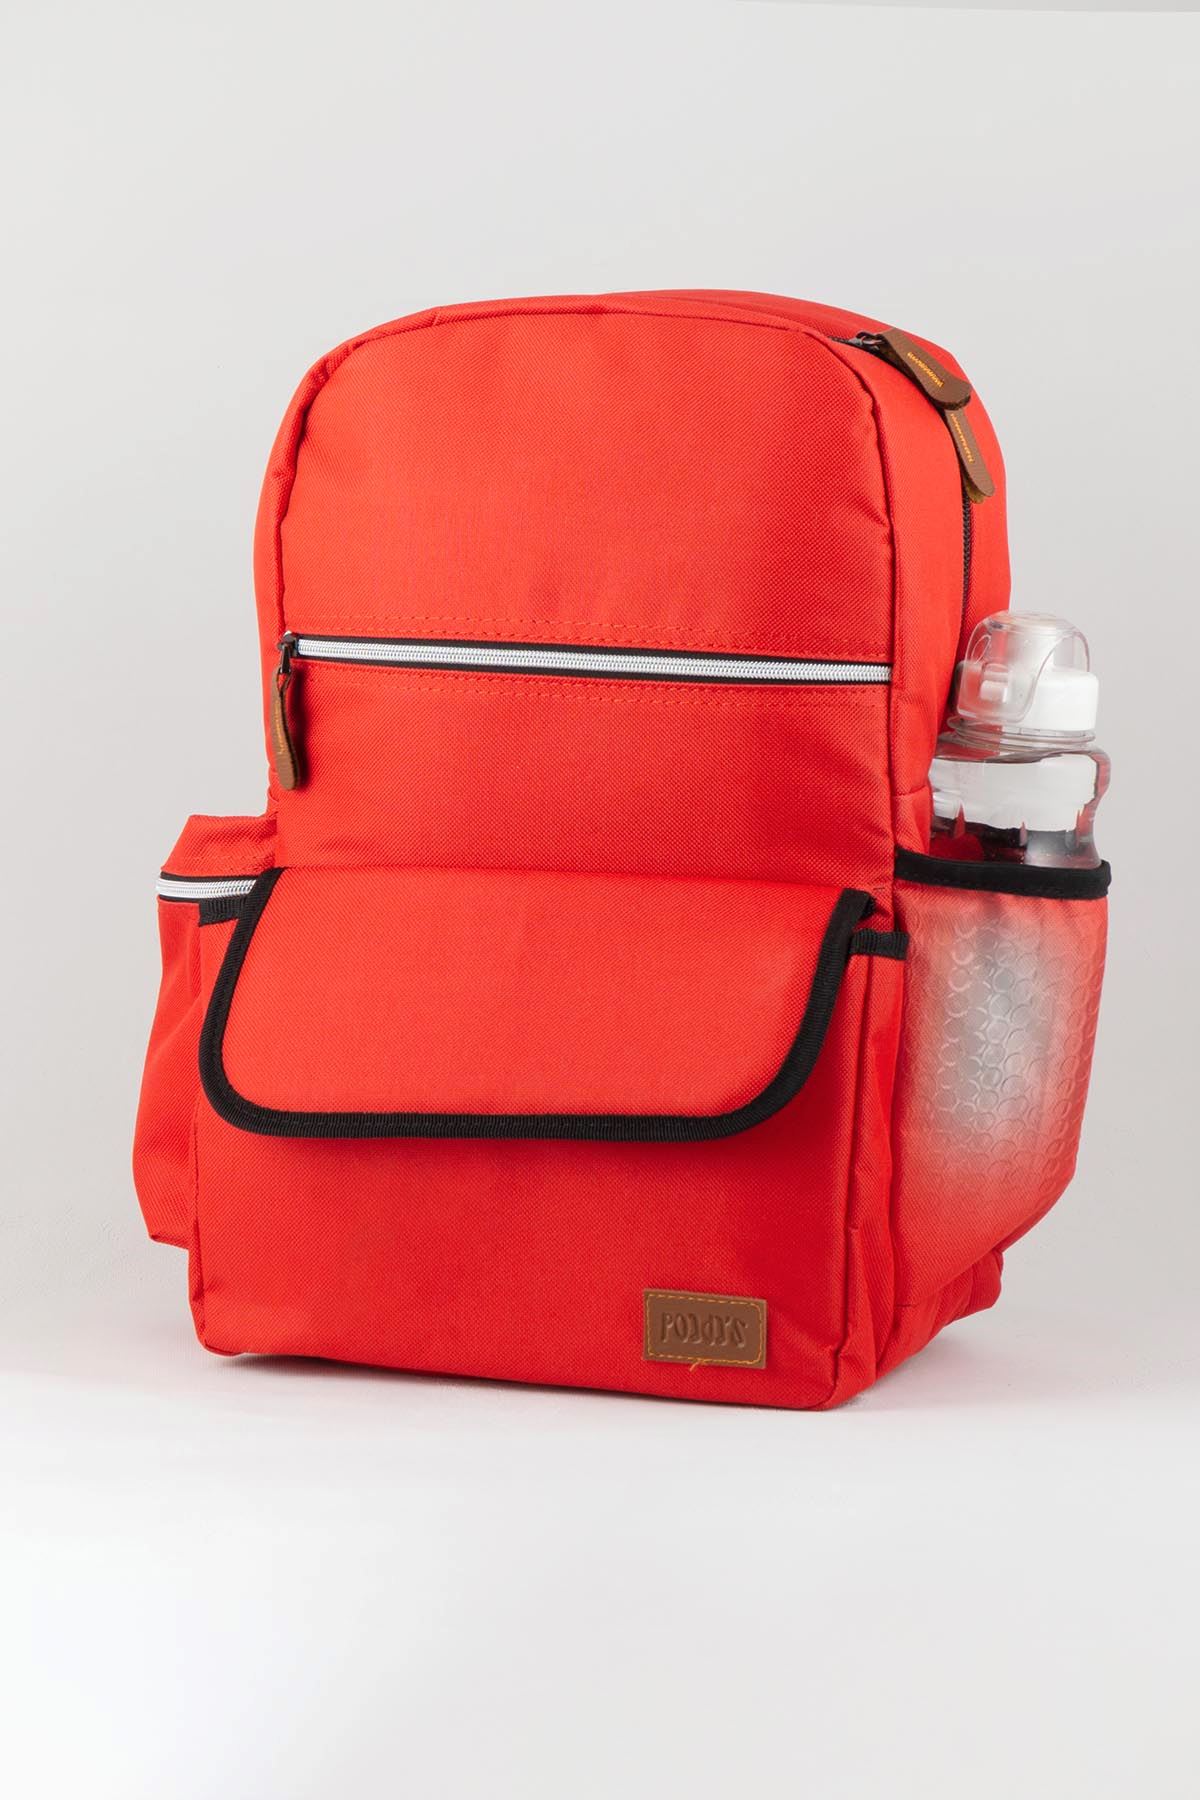 Po'Bag Çanta - Kırmızı